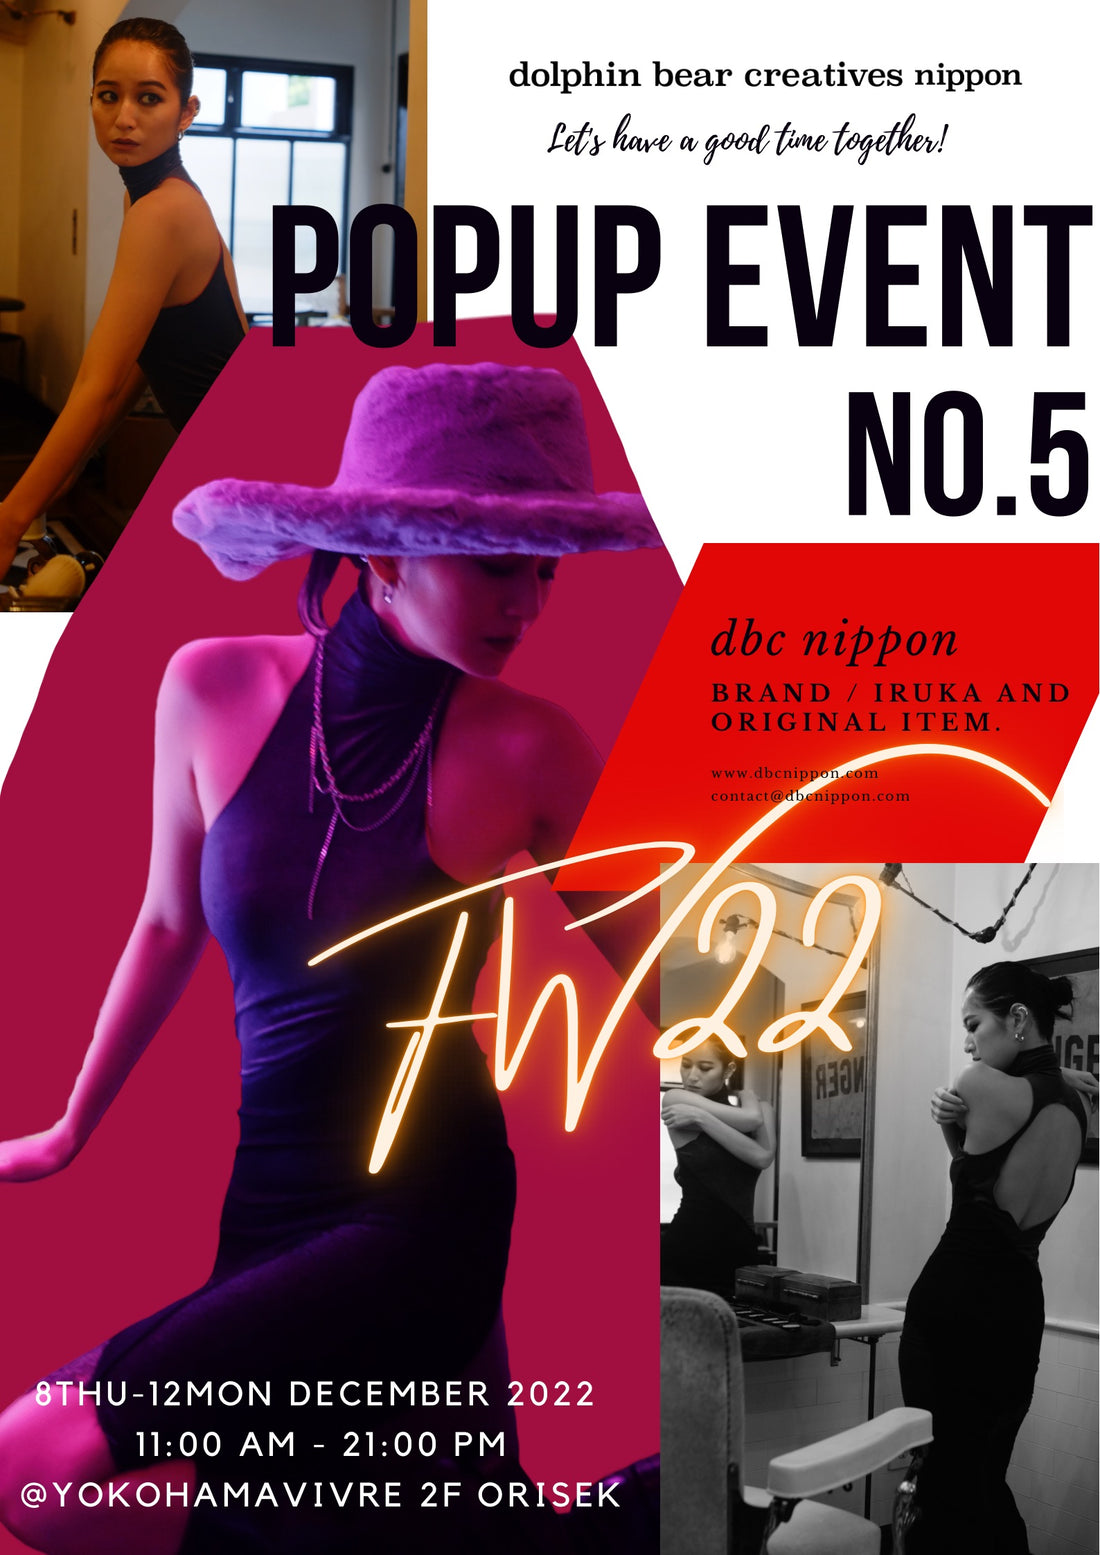 【FW22 POP UP EVENT “no.5”】2022.12.8thu -12 mon open11:00- close 21:00 @orisek